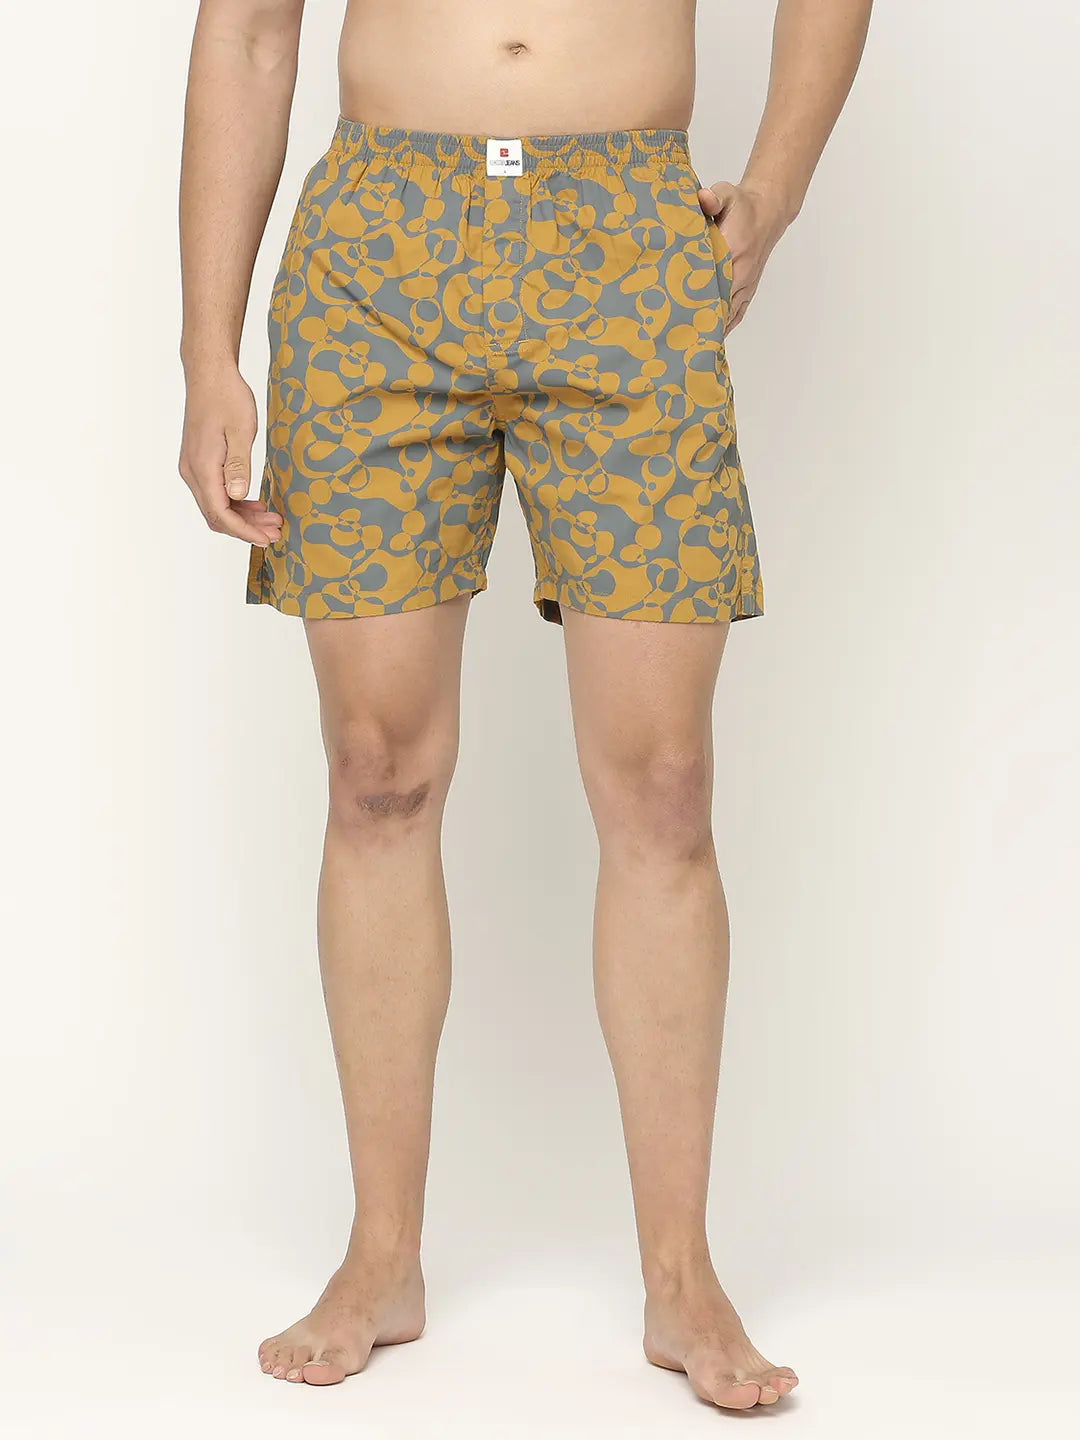 Banana Print Boxer Shorts - Printed Boxers for Men